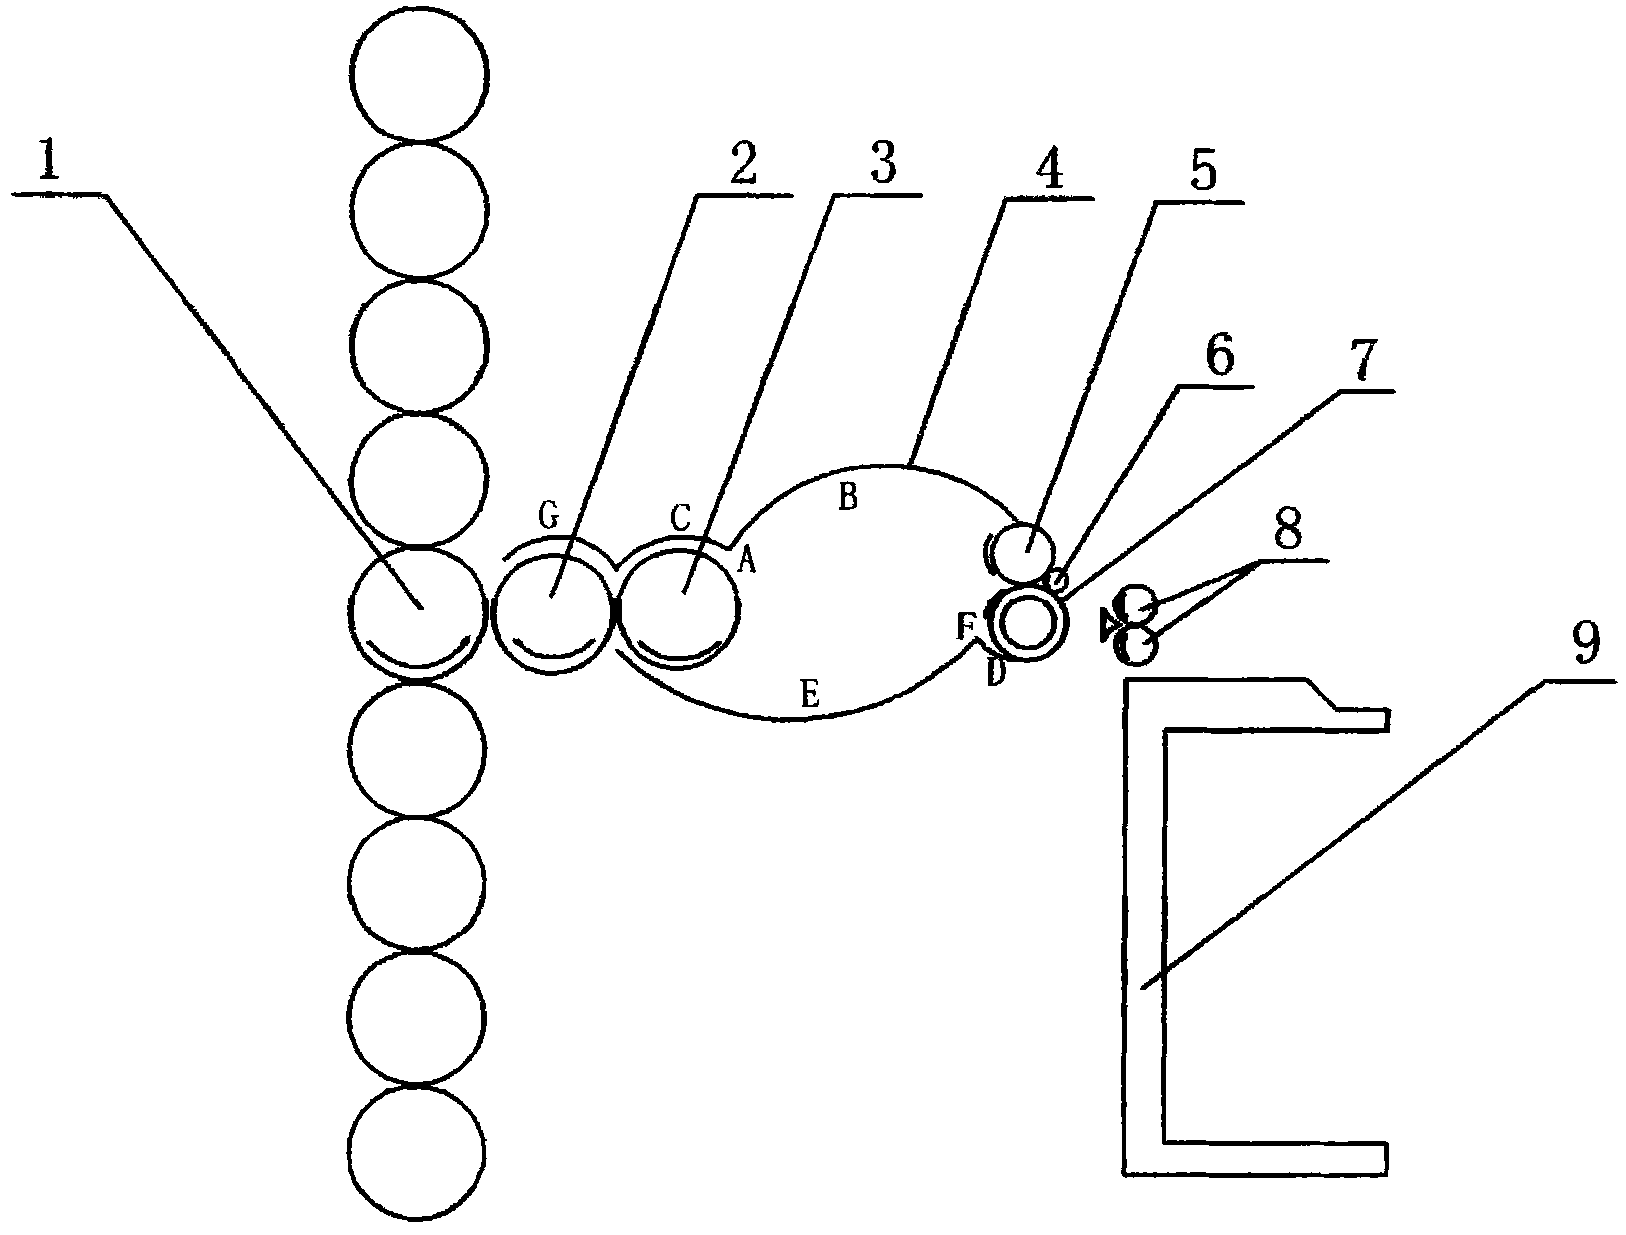 Discharging device of carding machine